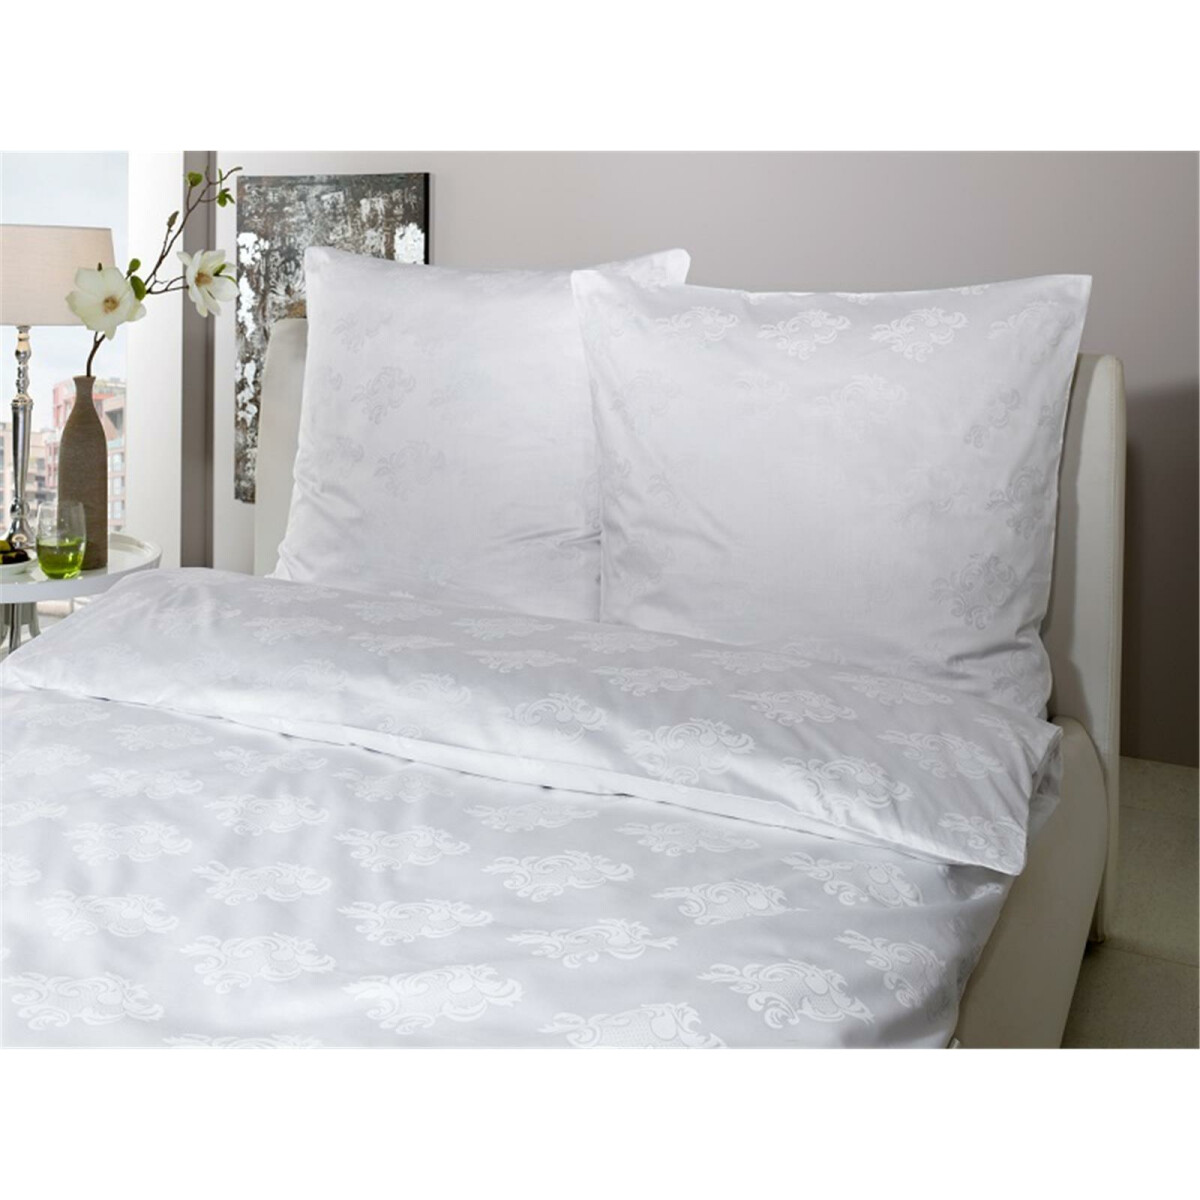 Hotel Duvet covers jacquard design Danubio white white 60x80 cm Mus, 8,90